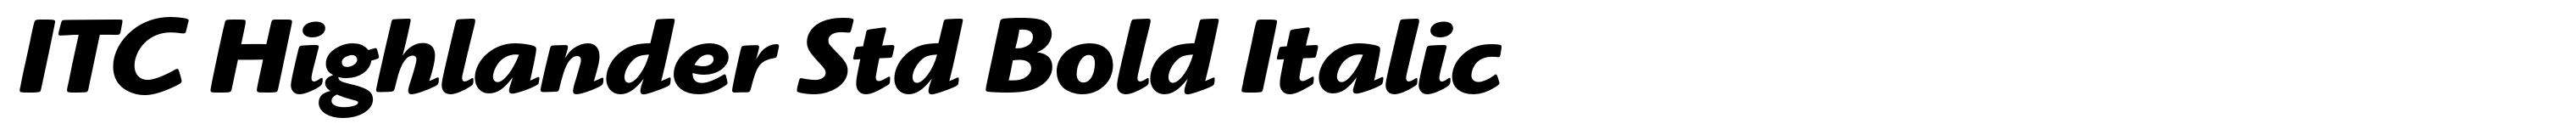 ITC Highlander Std Bold Italic